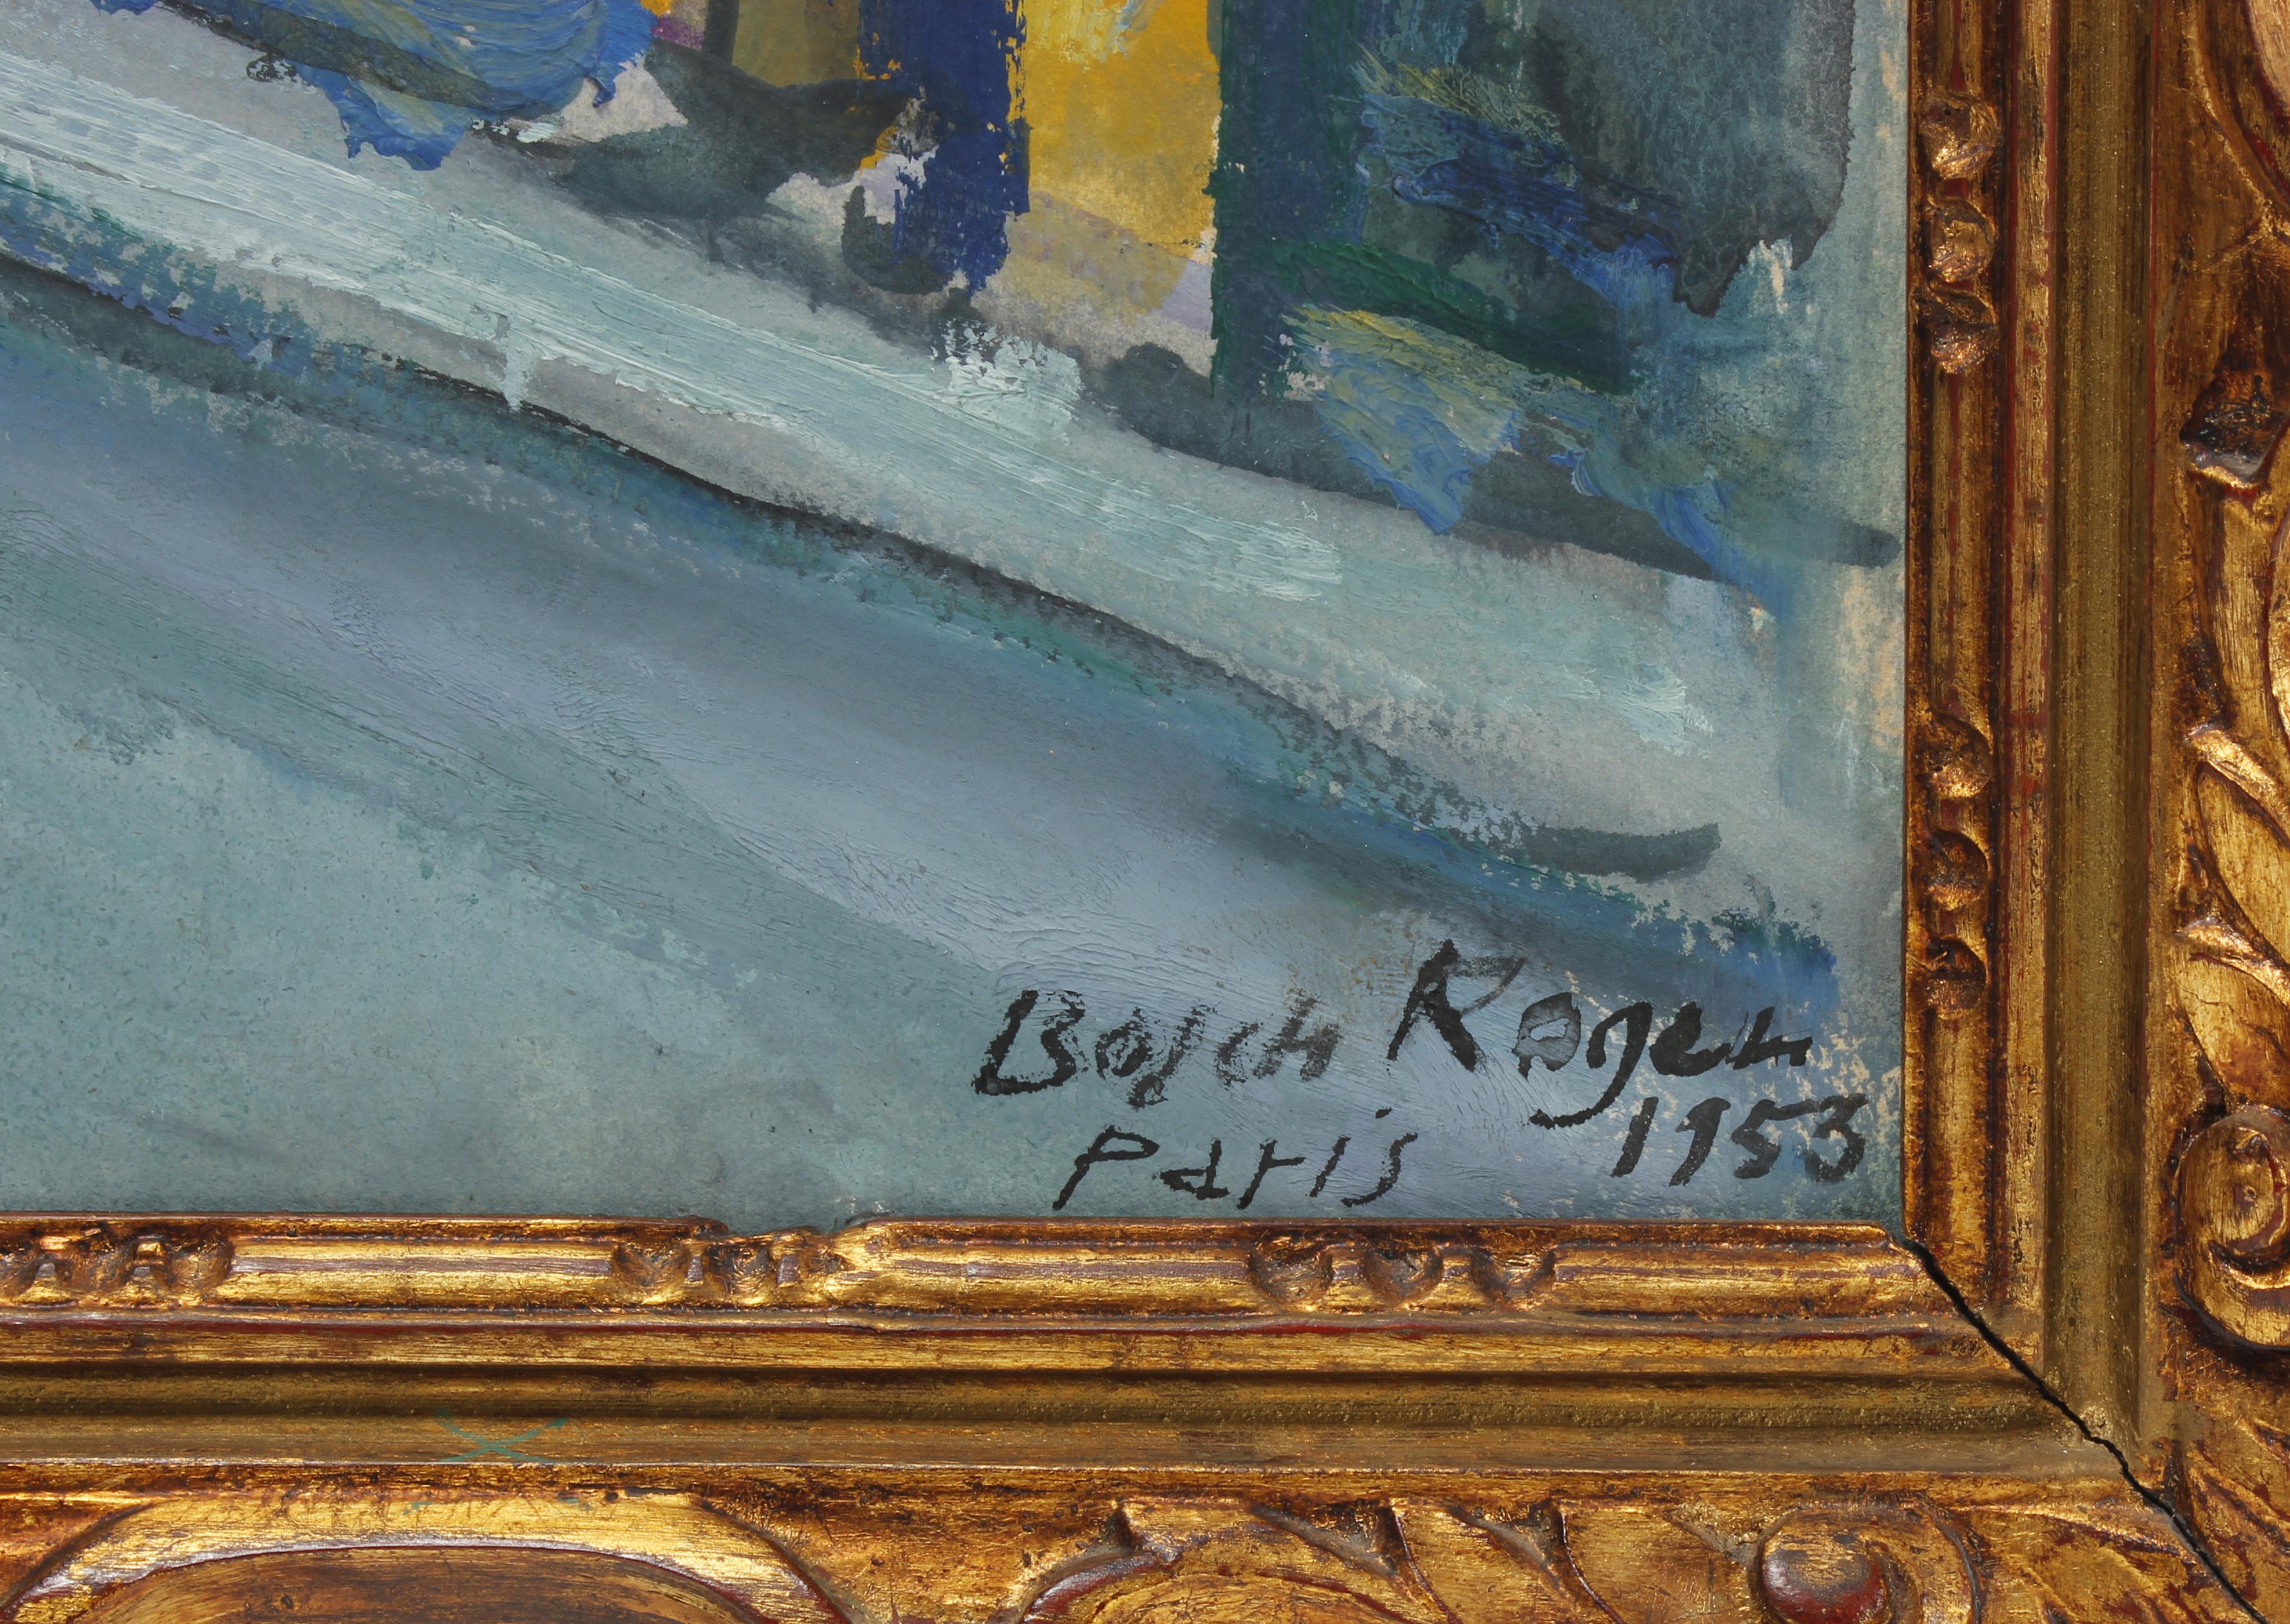 EMILI BOSCH ROGER (1894-1980). "CALLES DE PARÍS", 1953.